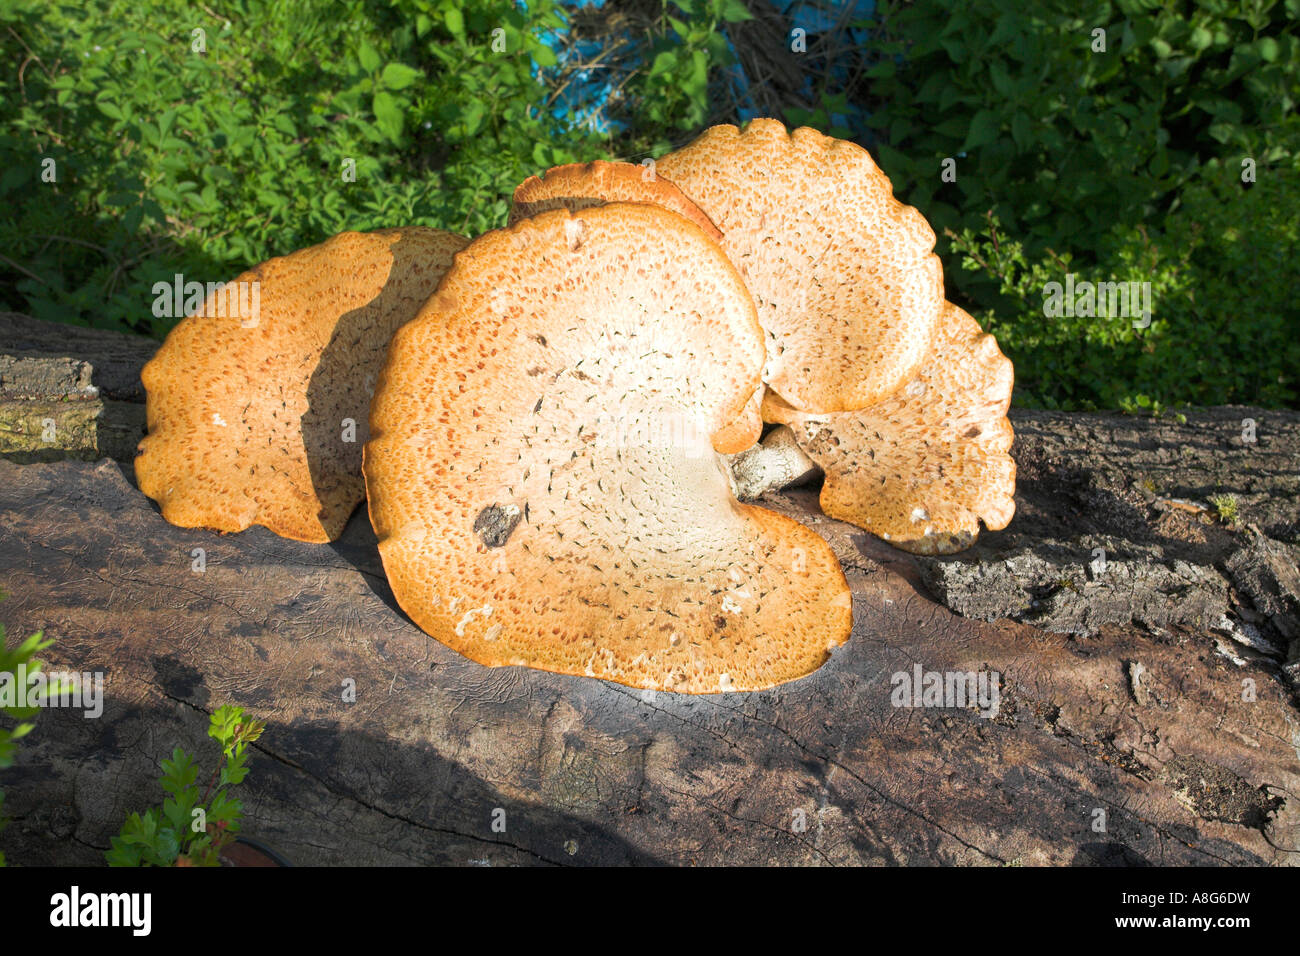 Fungus growing on a fallen tree trunk. Stock Photo